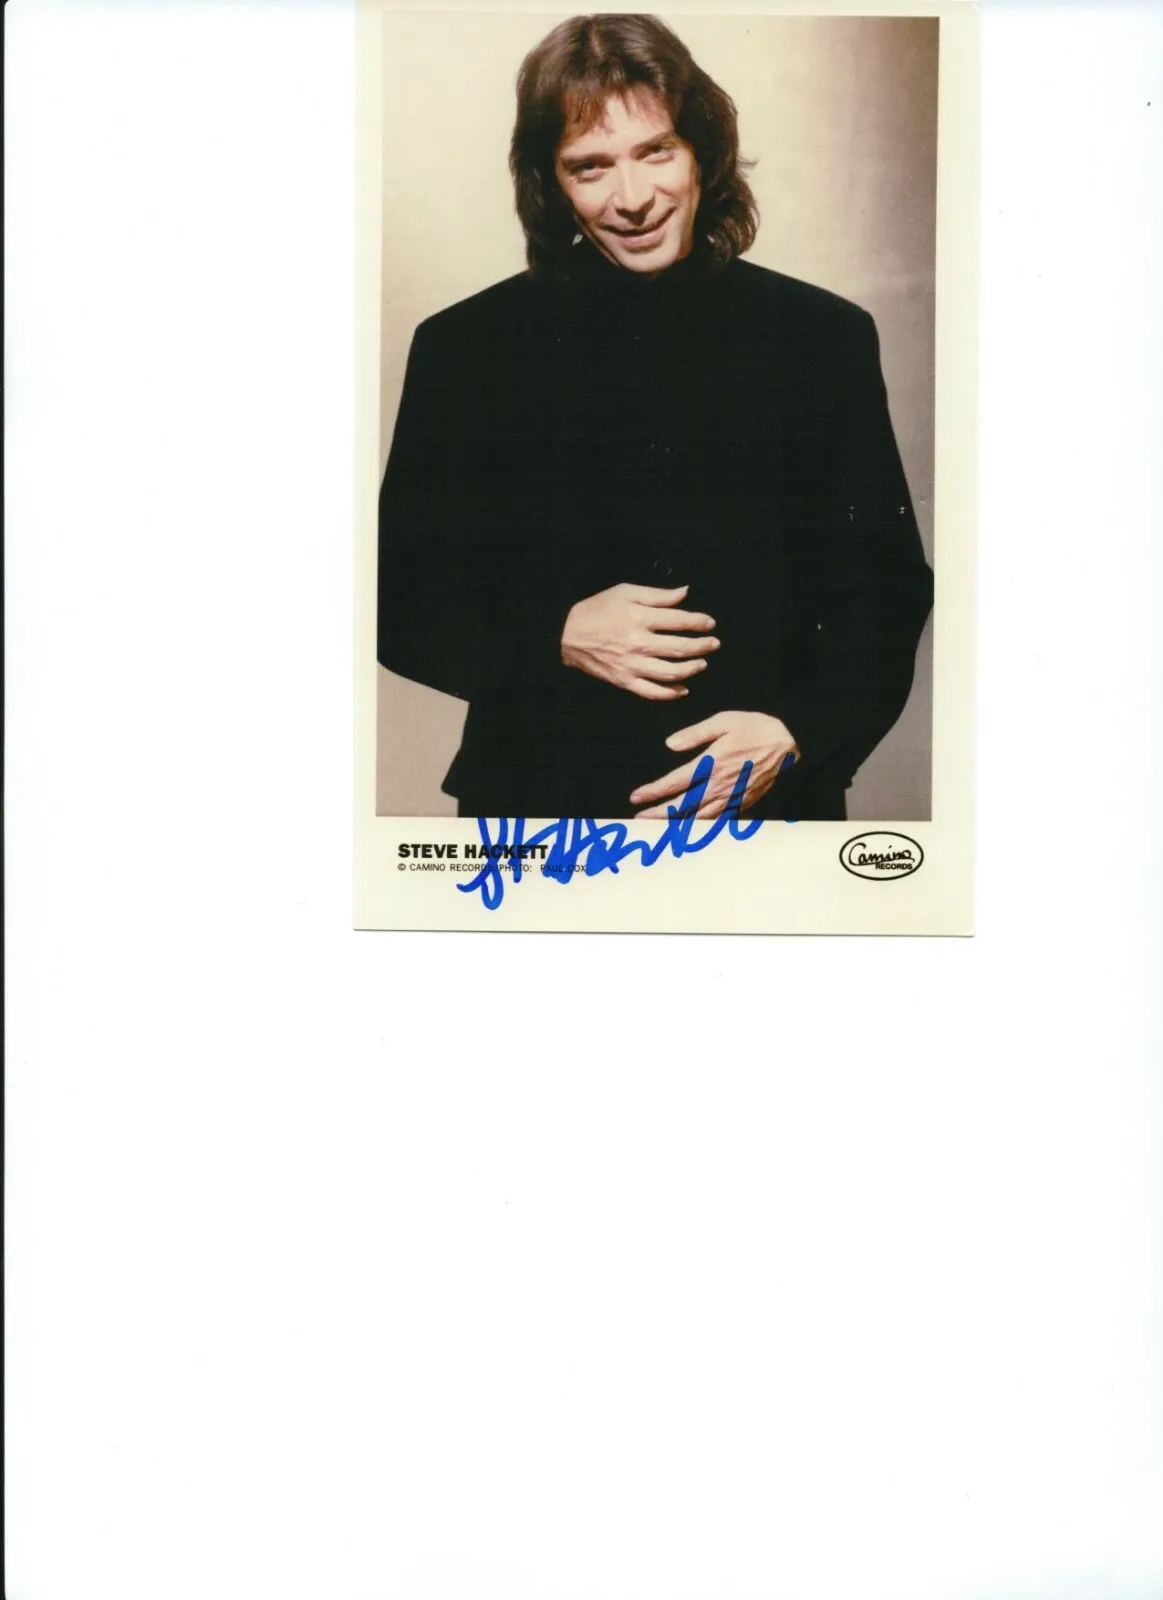 Steve Hackett Signed Genesis Autograph - 5x7 Photo - Camino Records